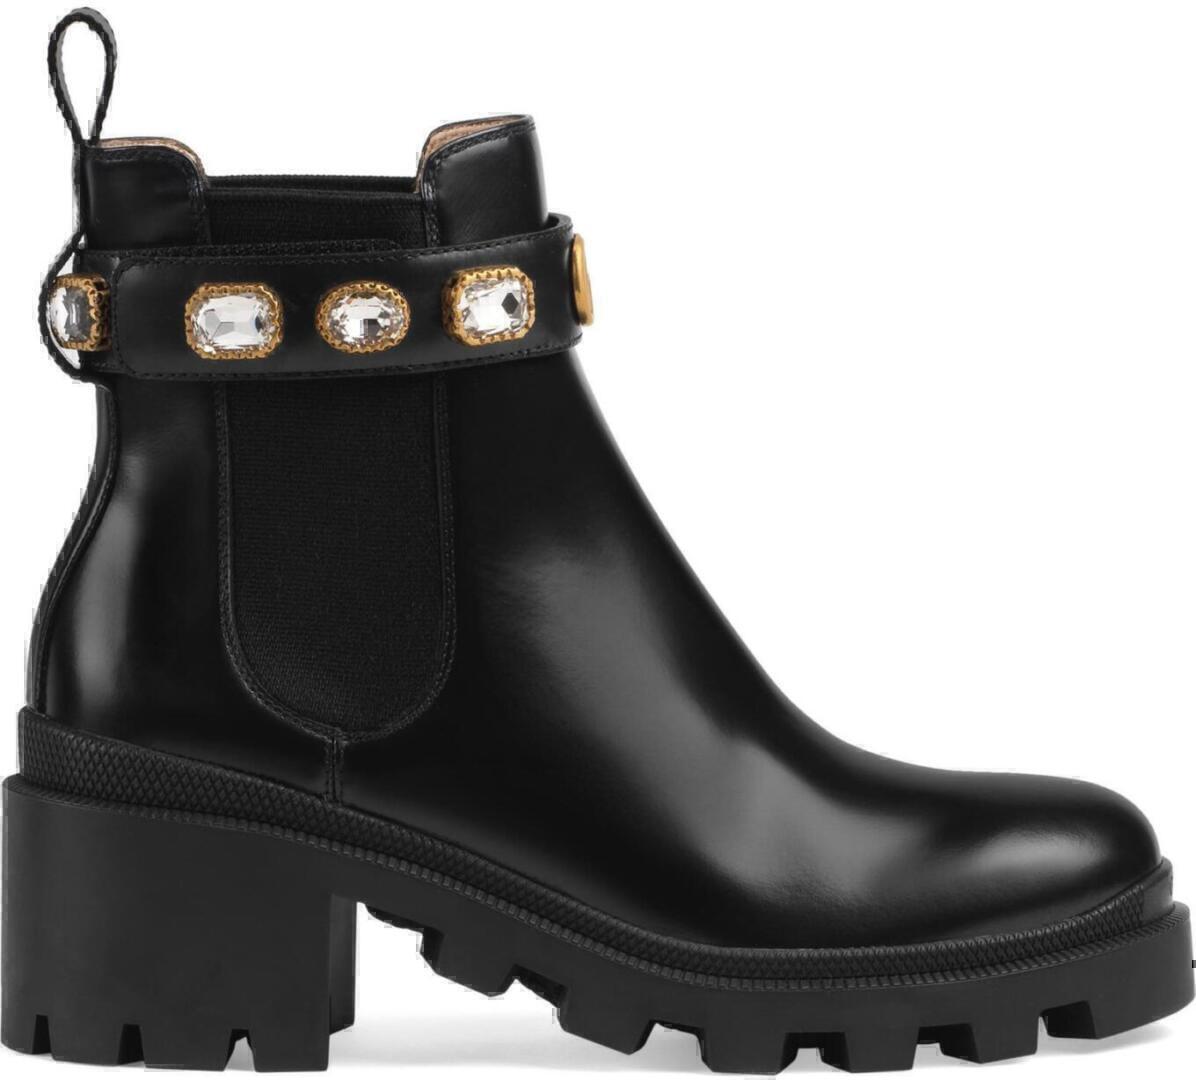 Trip Jewel Strap Boots (Black) | style